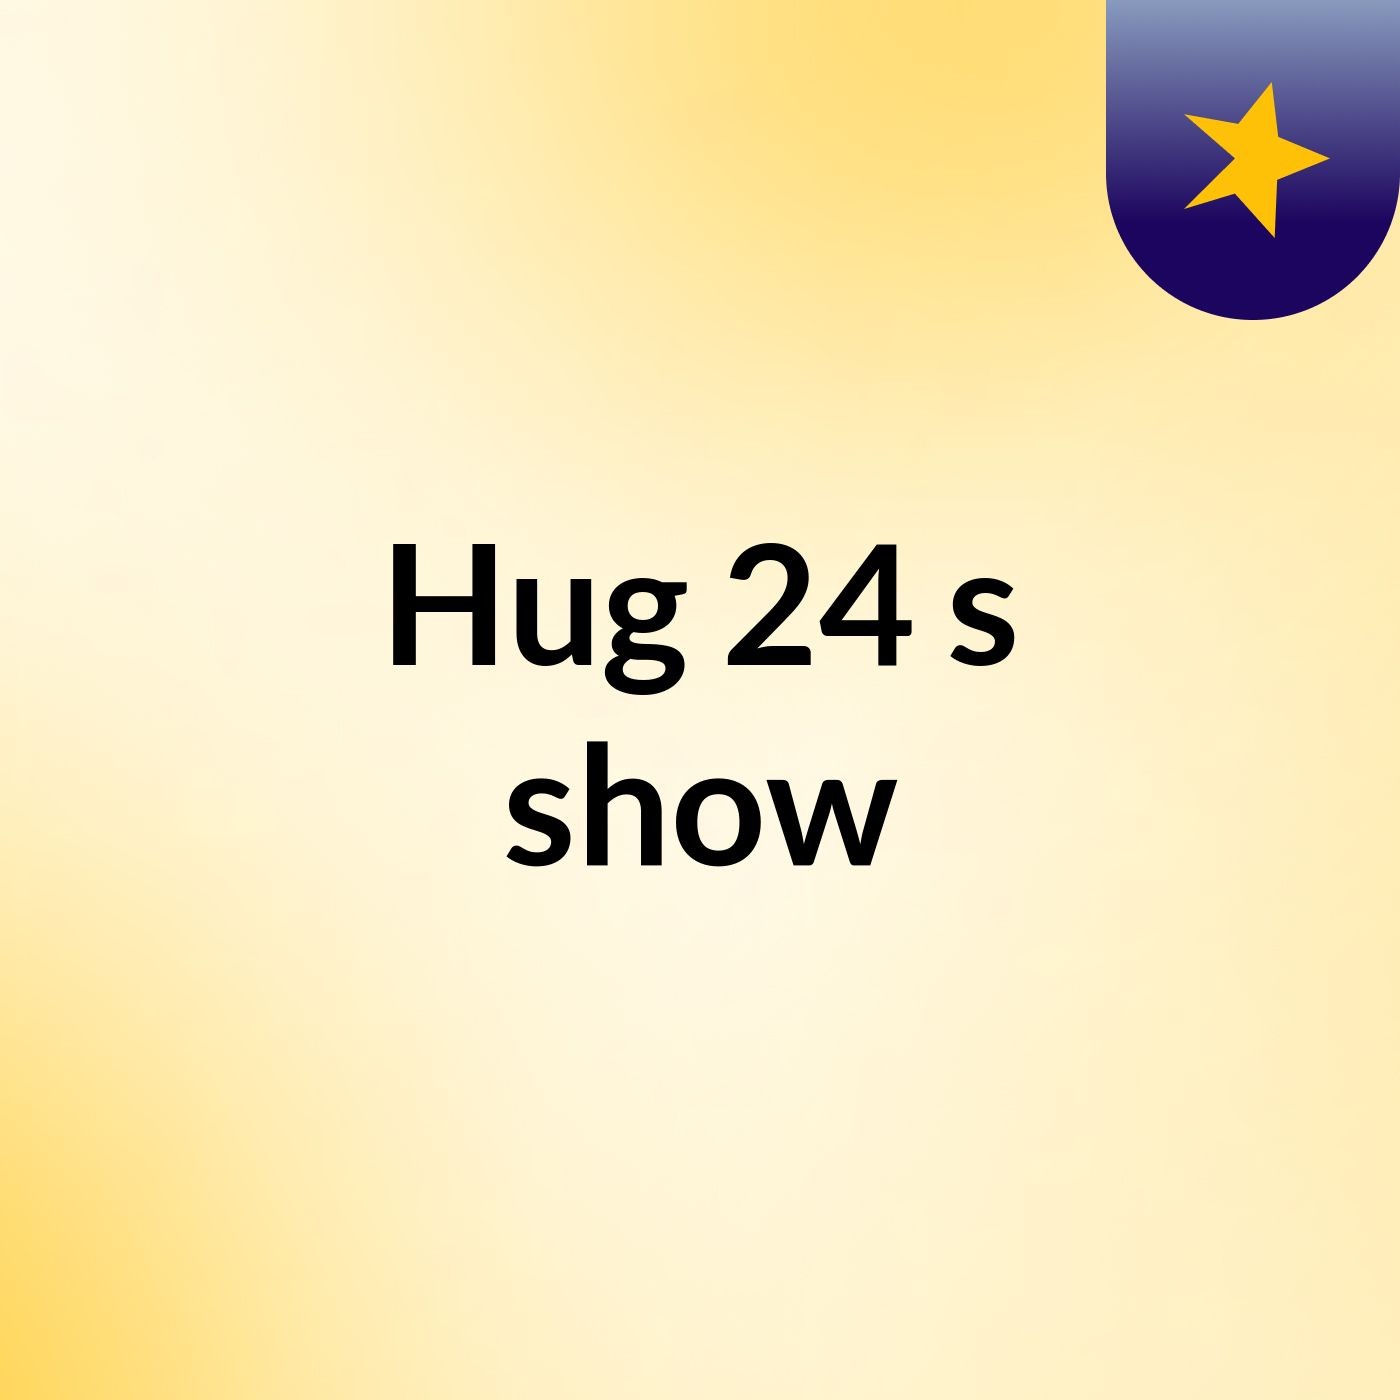 Hug 24's show